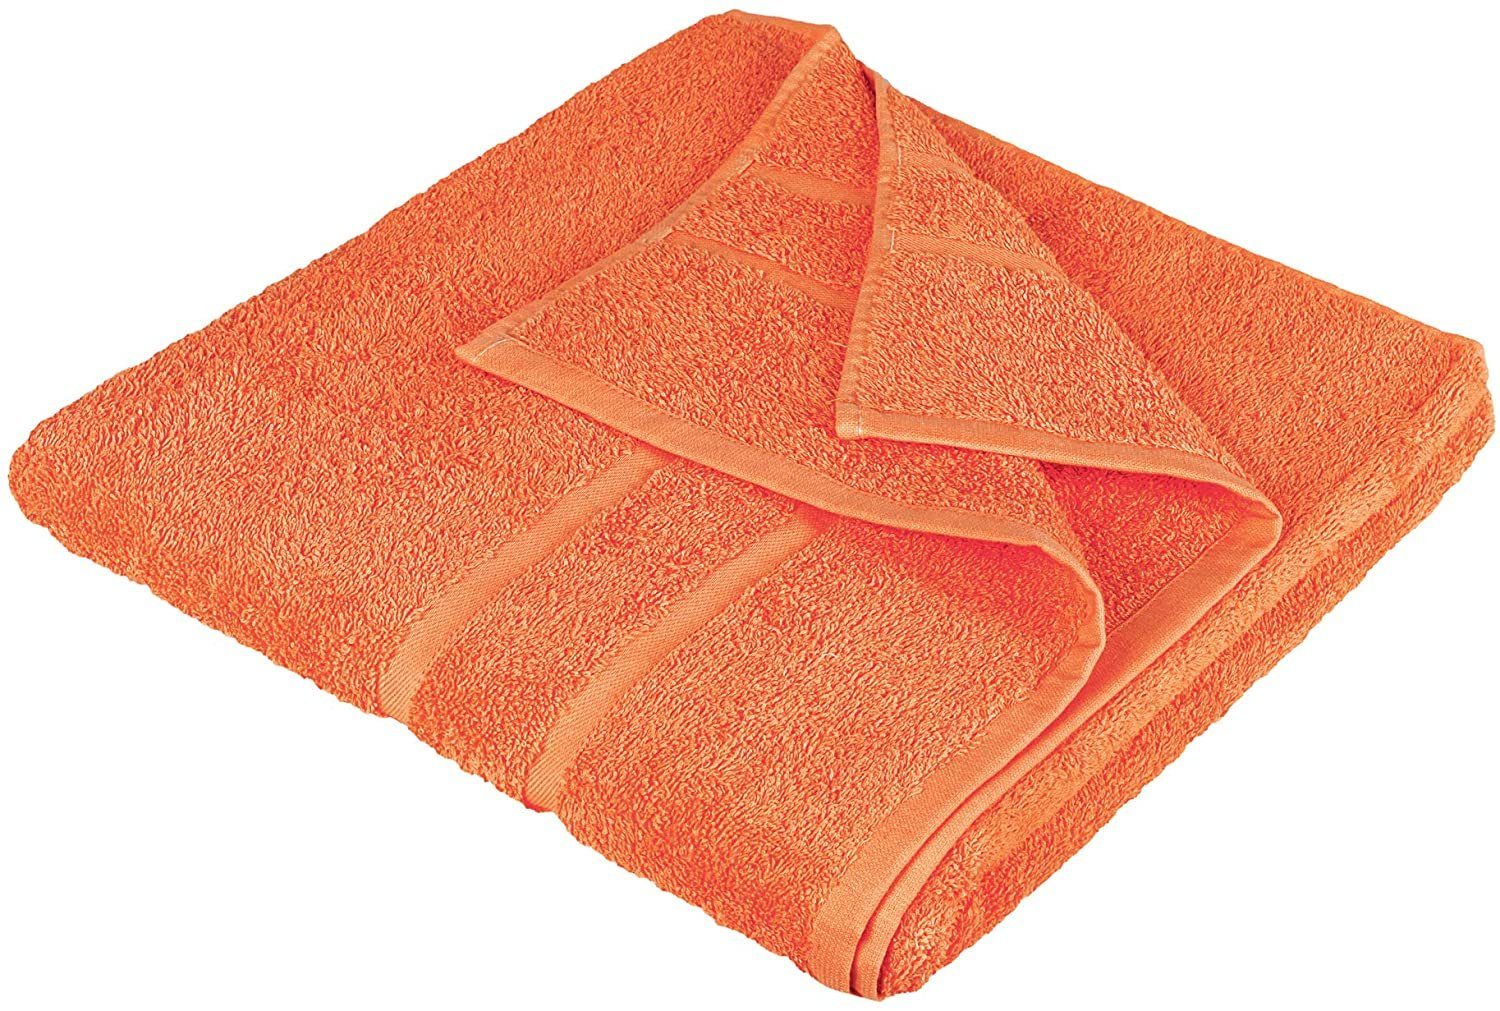 2x 2x 2x 8er Frottee Handtuch 500 Handtuch GSM verschiedenen Pack, Duschtücher Orange in als 500 Baumwolle Teilig) Handtücher Gästehandtuch (8 Baumwolle 2x Farben Badetücher SET GSM Set 100% StickandShine 100%